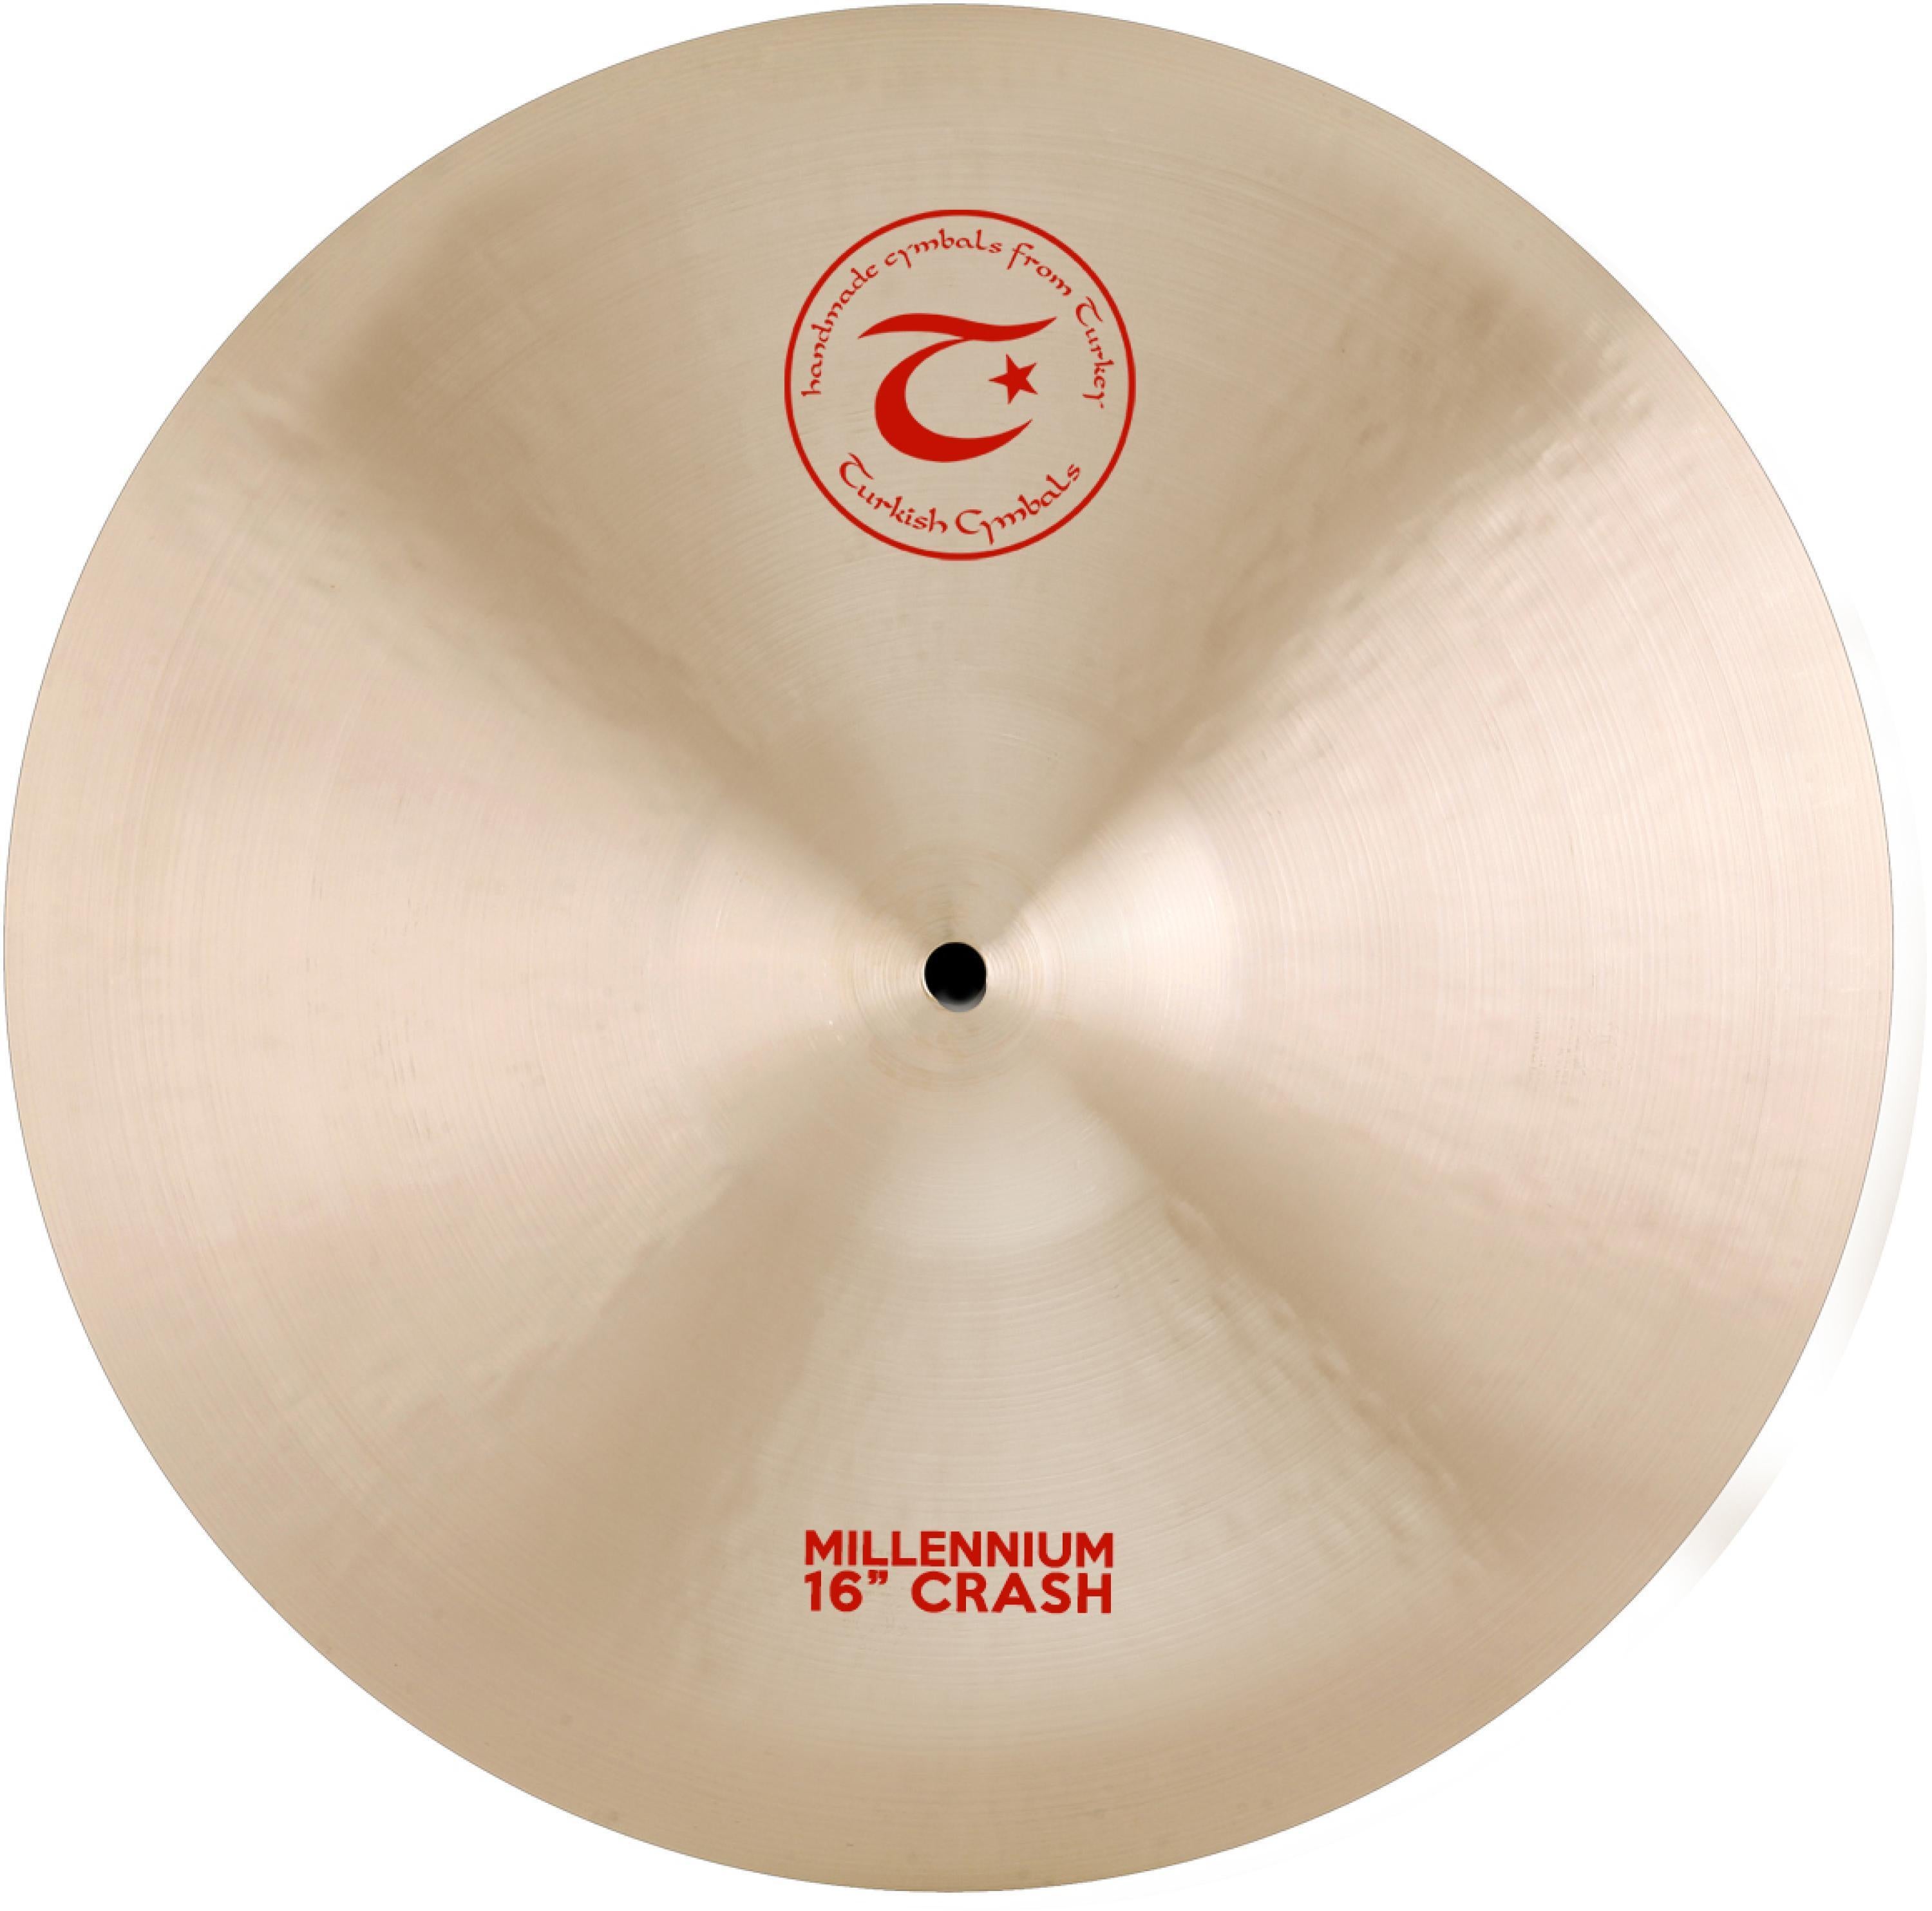 Turkish Cymbals Millennium Crash Cymbal - 16 inch | Sweetwater